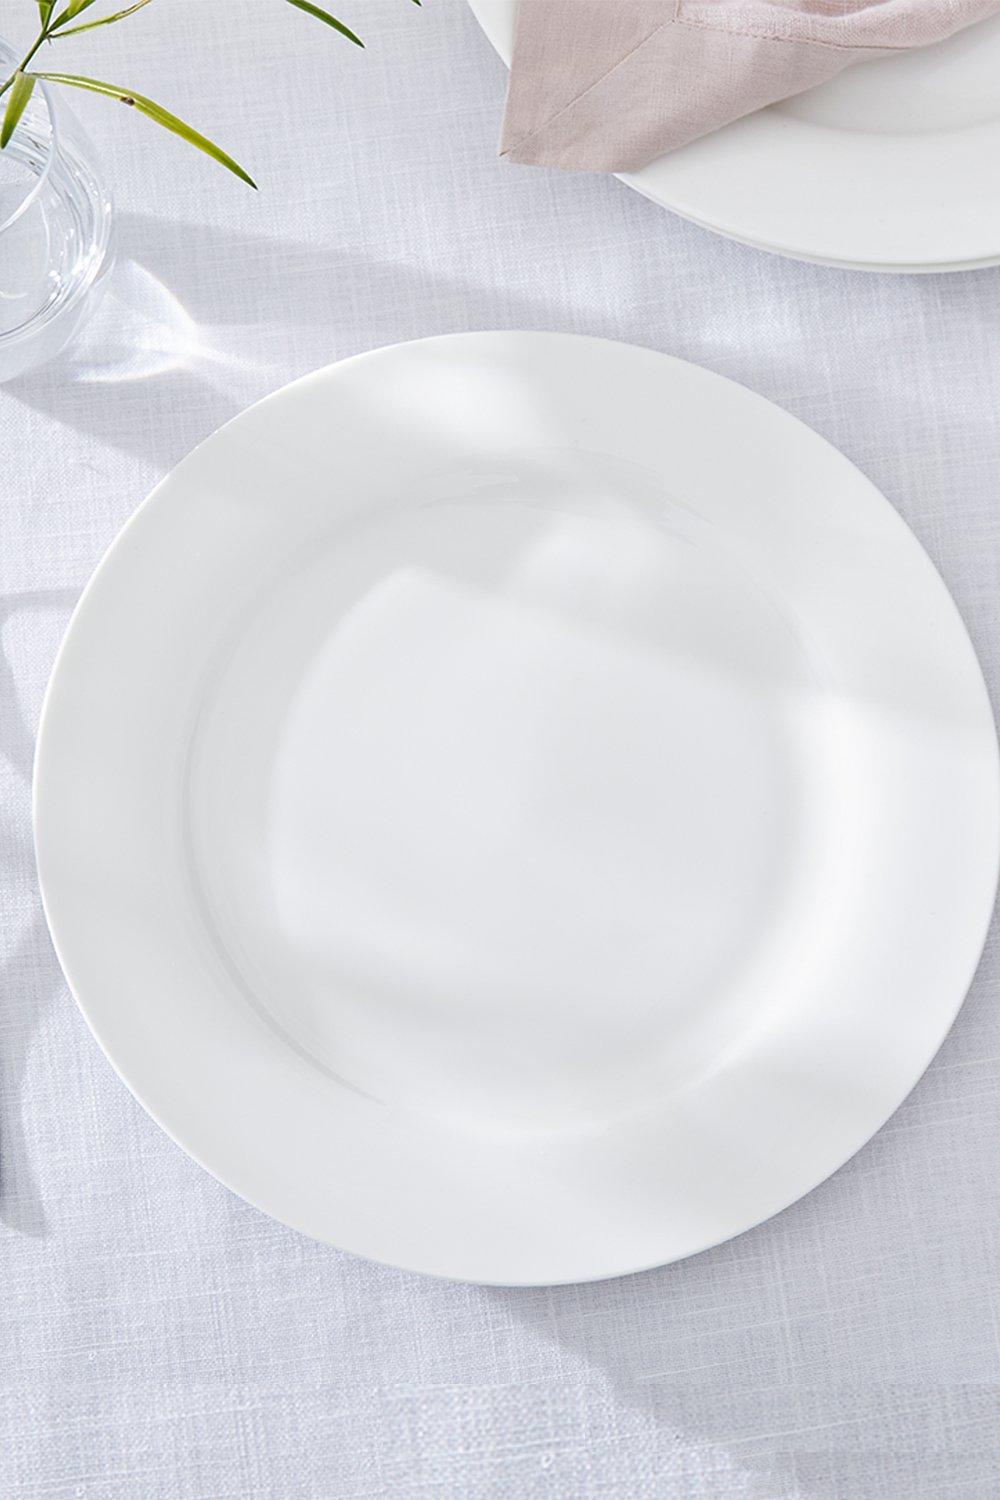 'Serendipity' Set of 4 26cm Dinner Plates